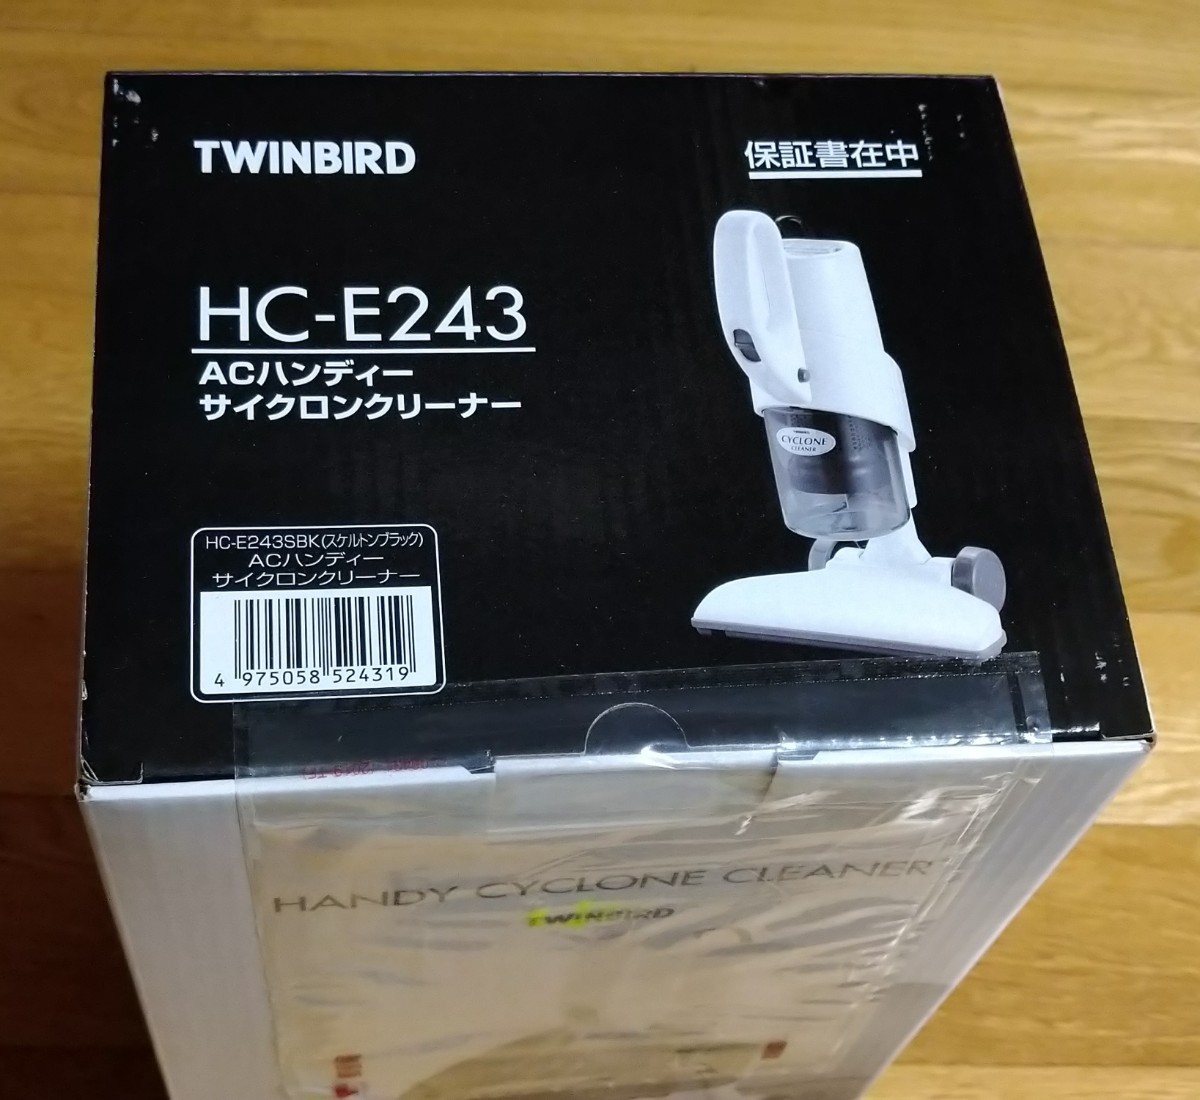 TWINBIRD ACハンディーサイクロンクリーナー HC-E243